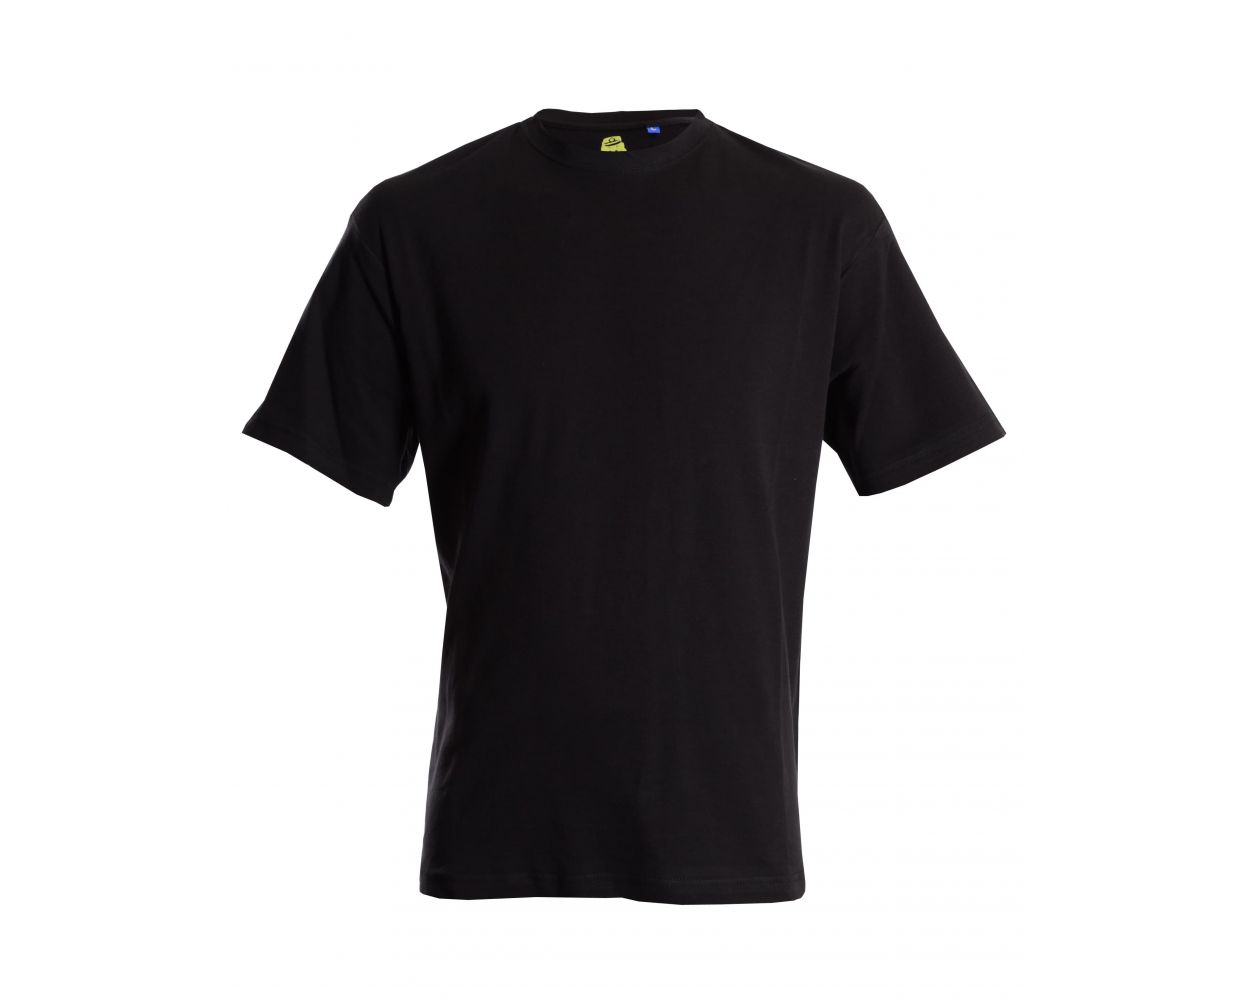 Bar Harbour Plain Black Ribbed Neck T-Shirt